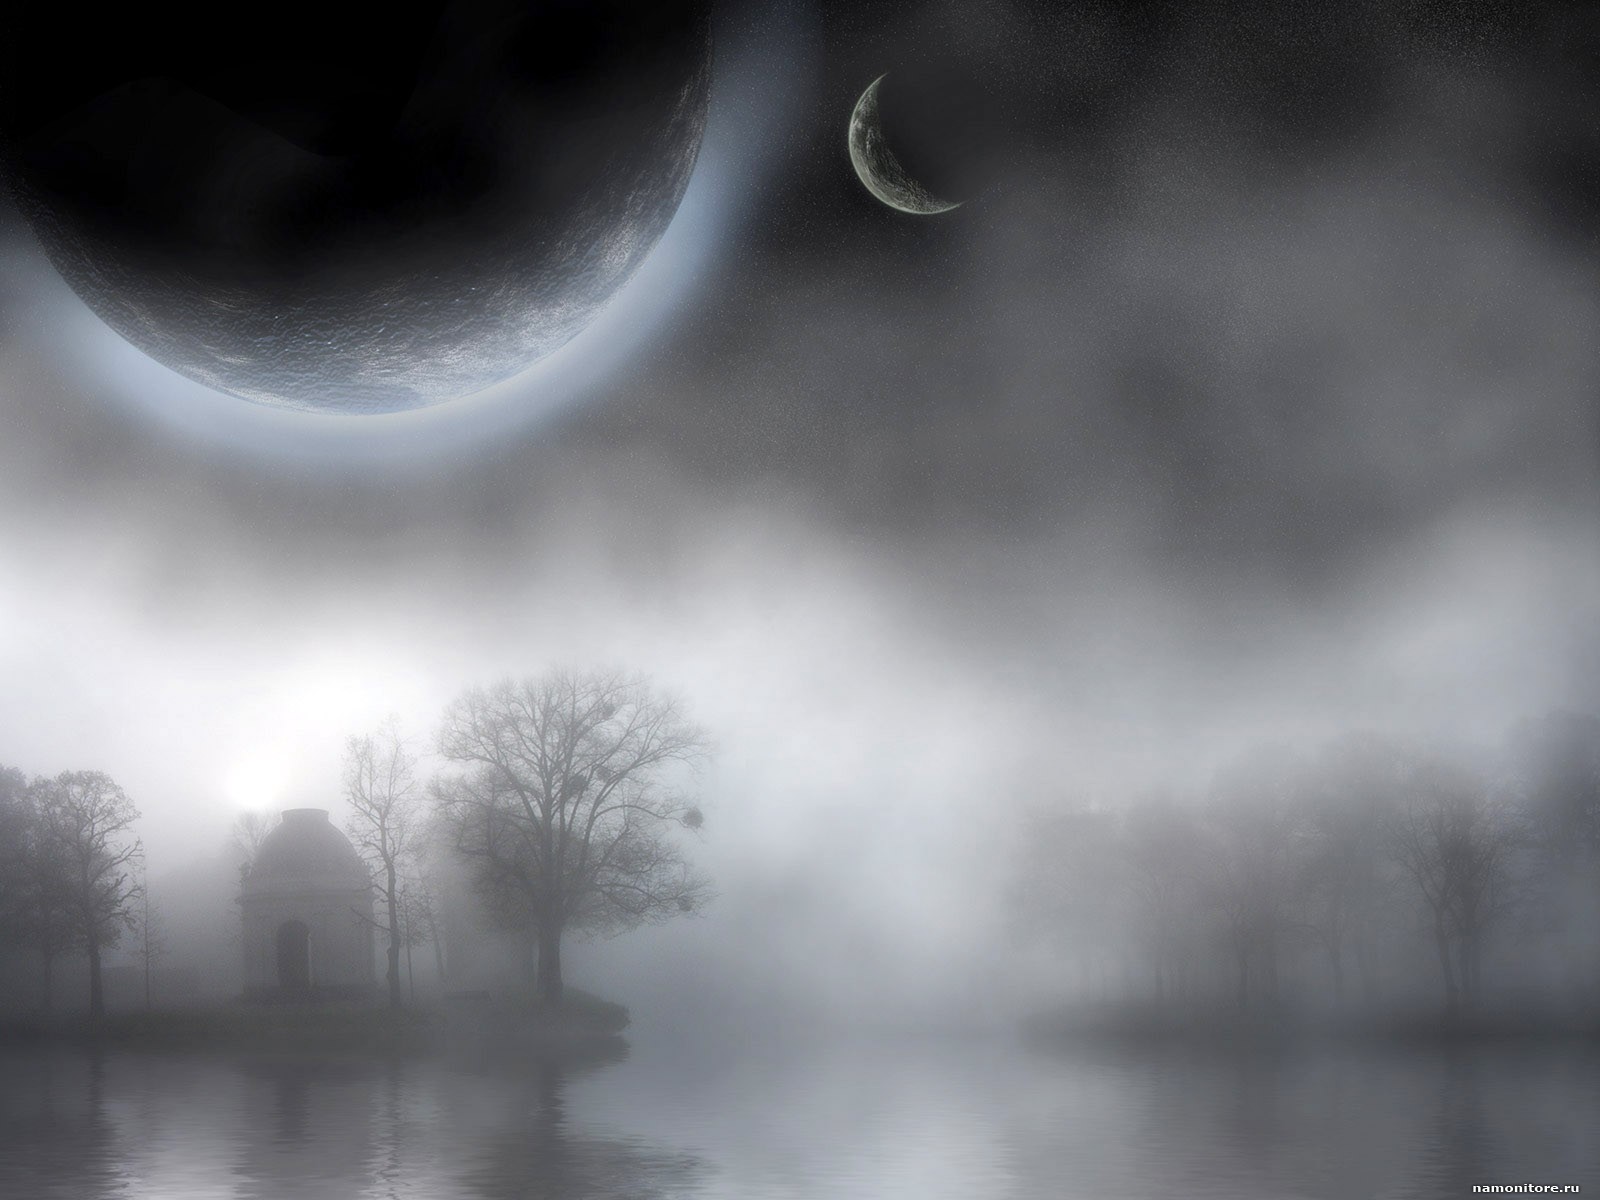 Тьма пелена. Мистический фон. Месяц в тумане. Серая ночь. Луна в тумане.